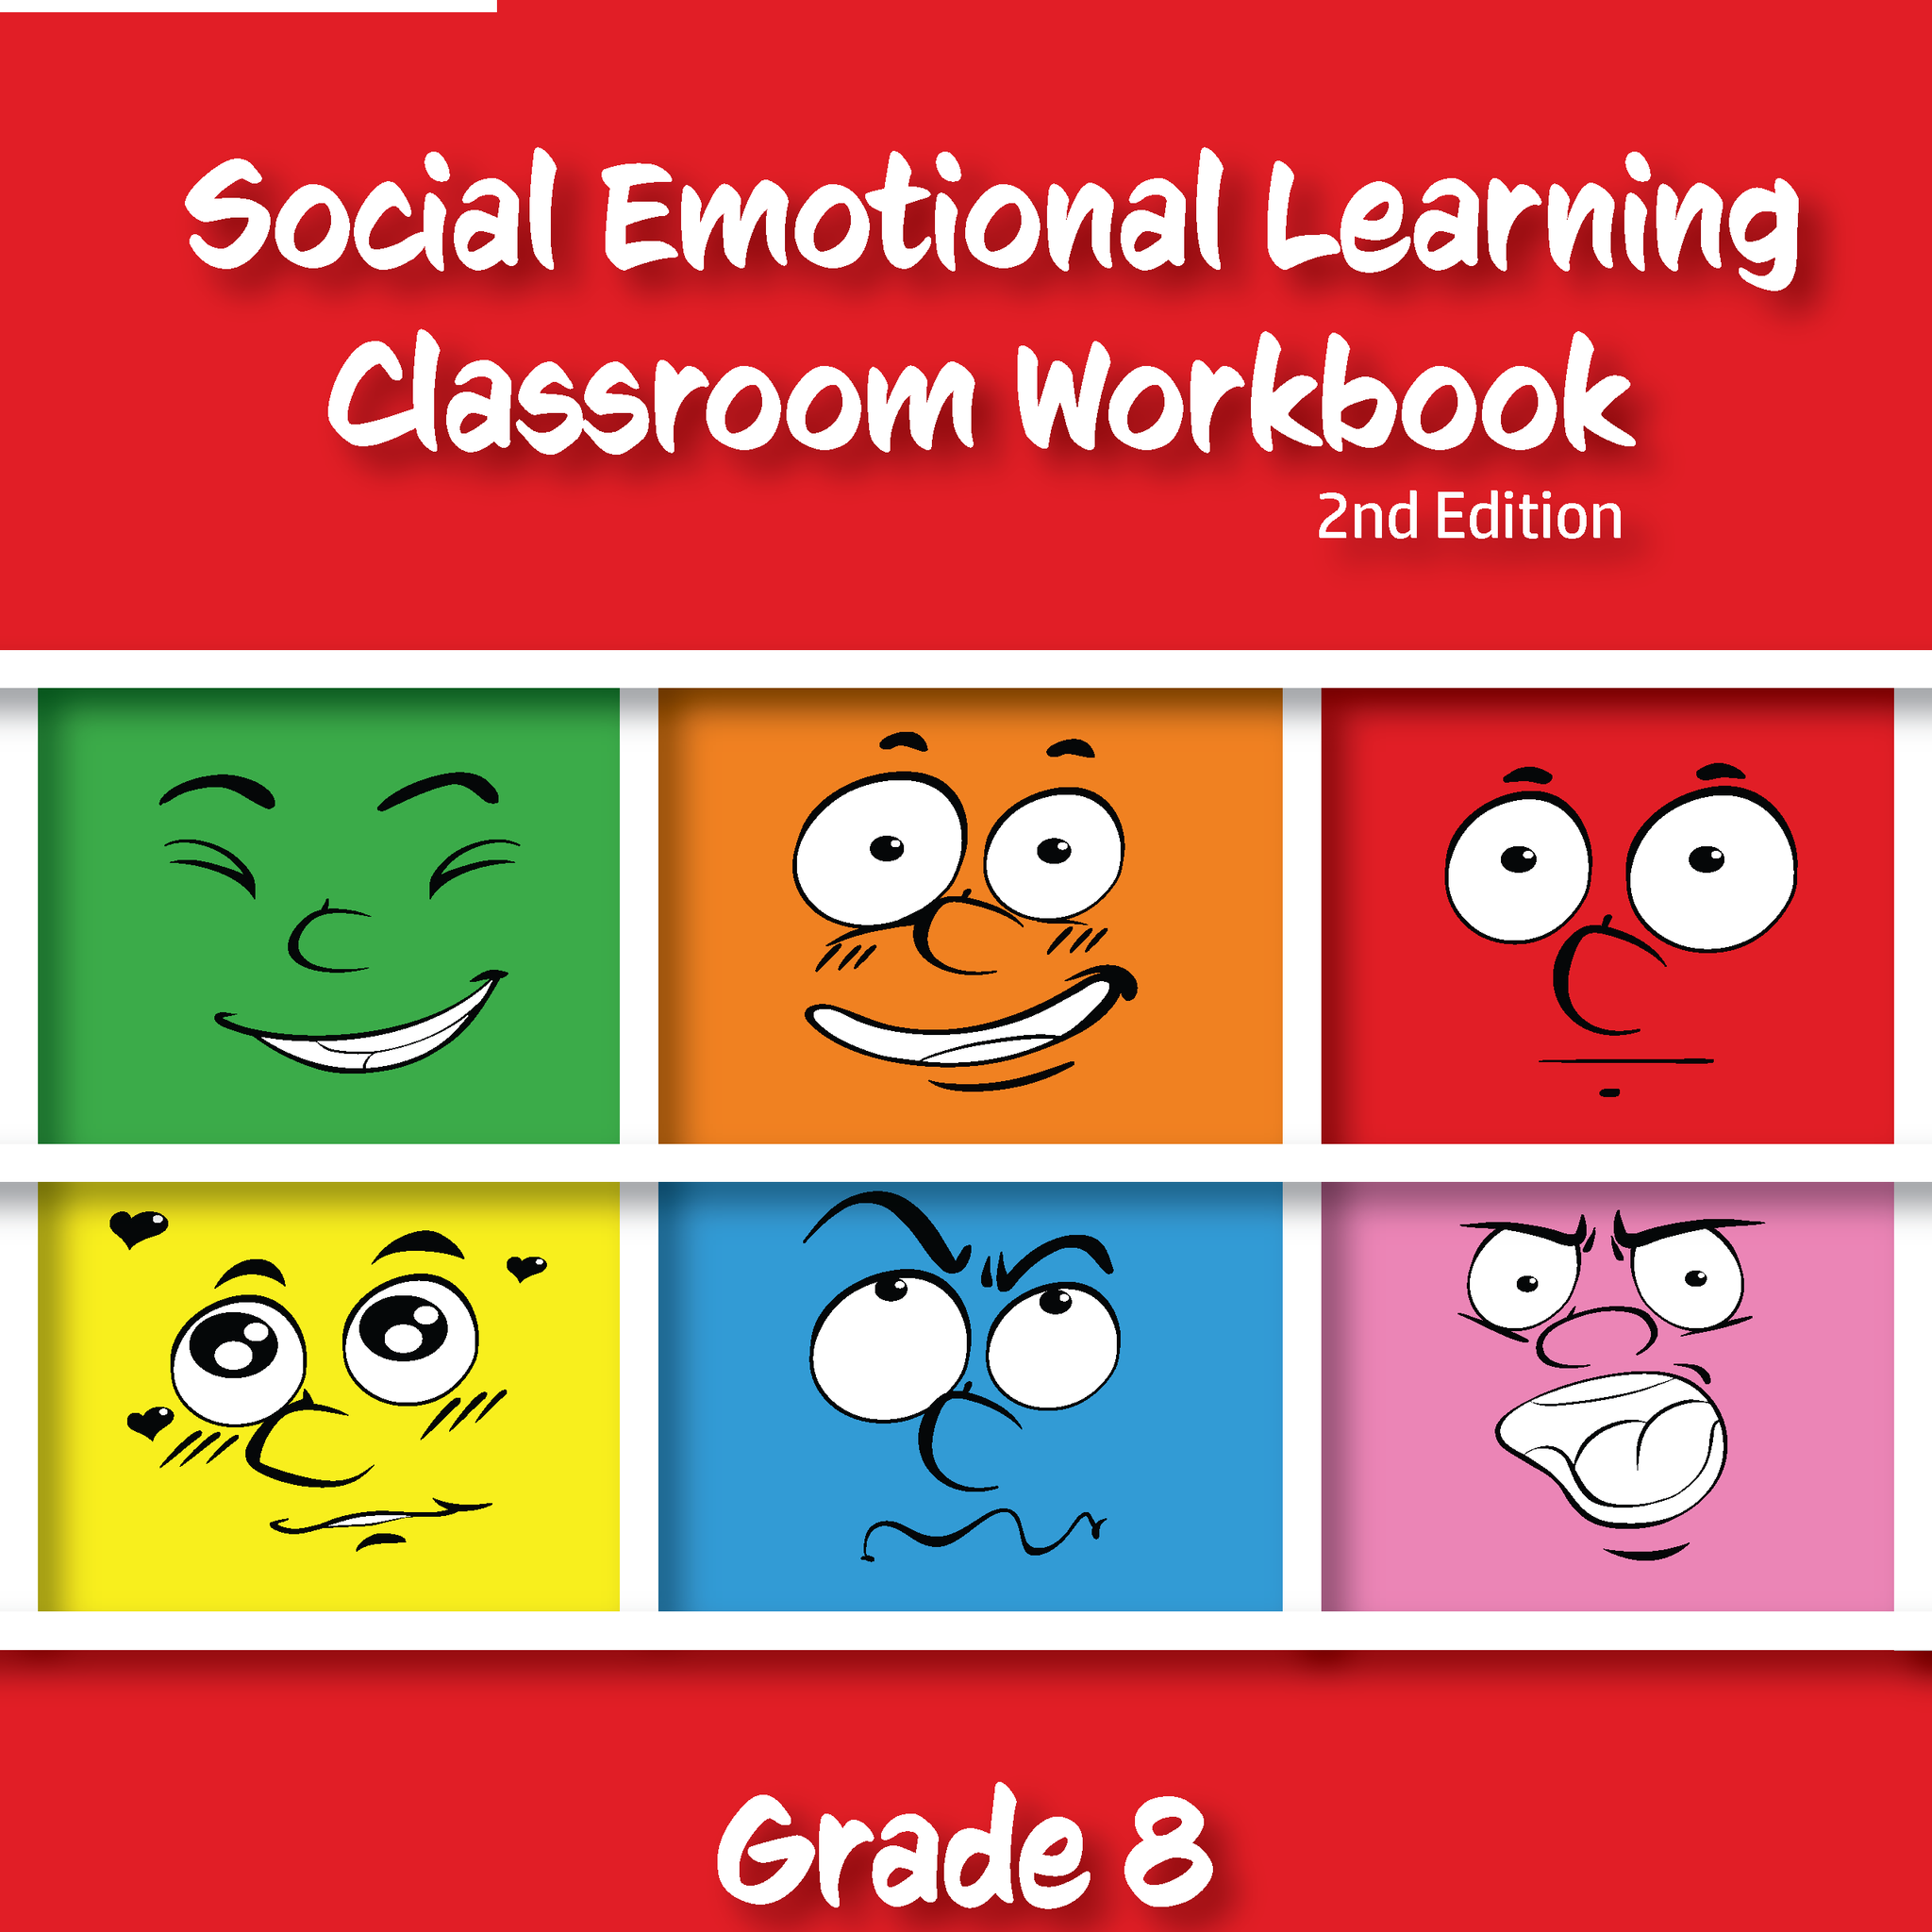 Social Emotional Learning Classroom Workbook - Grade 8, 2nd edition